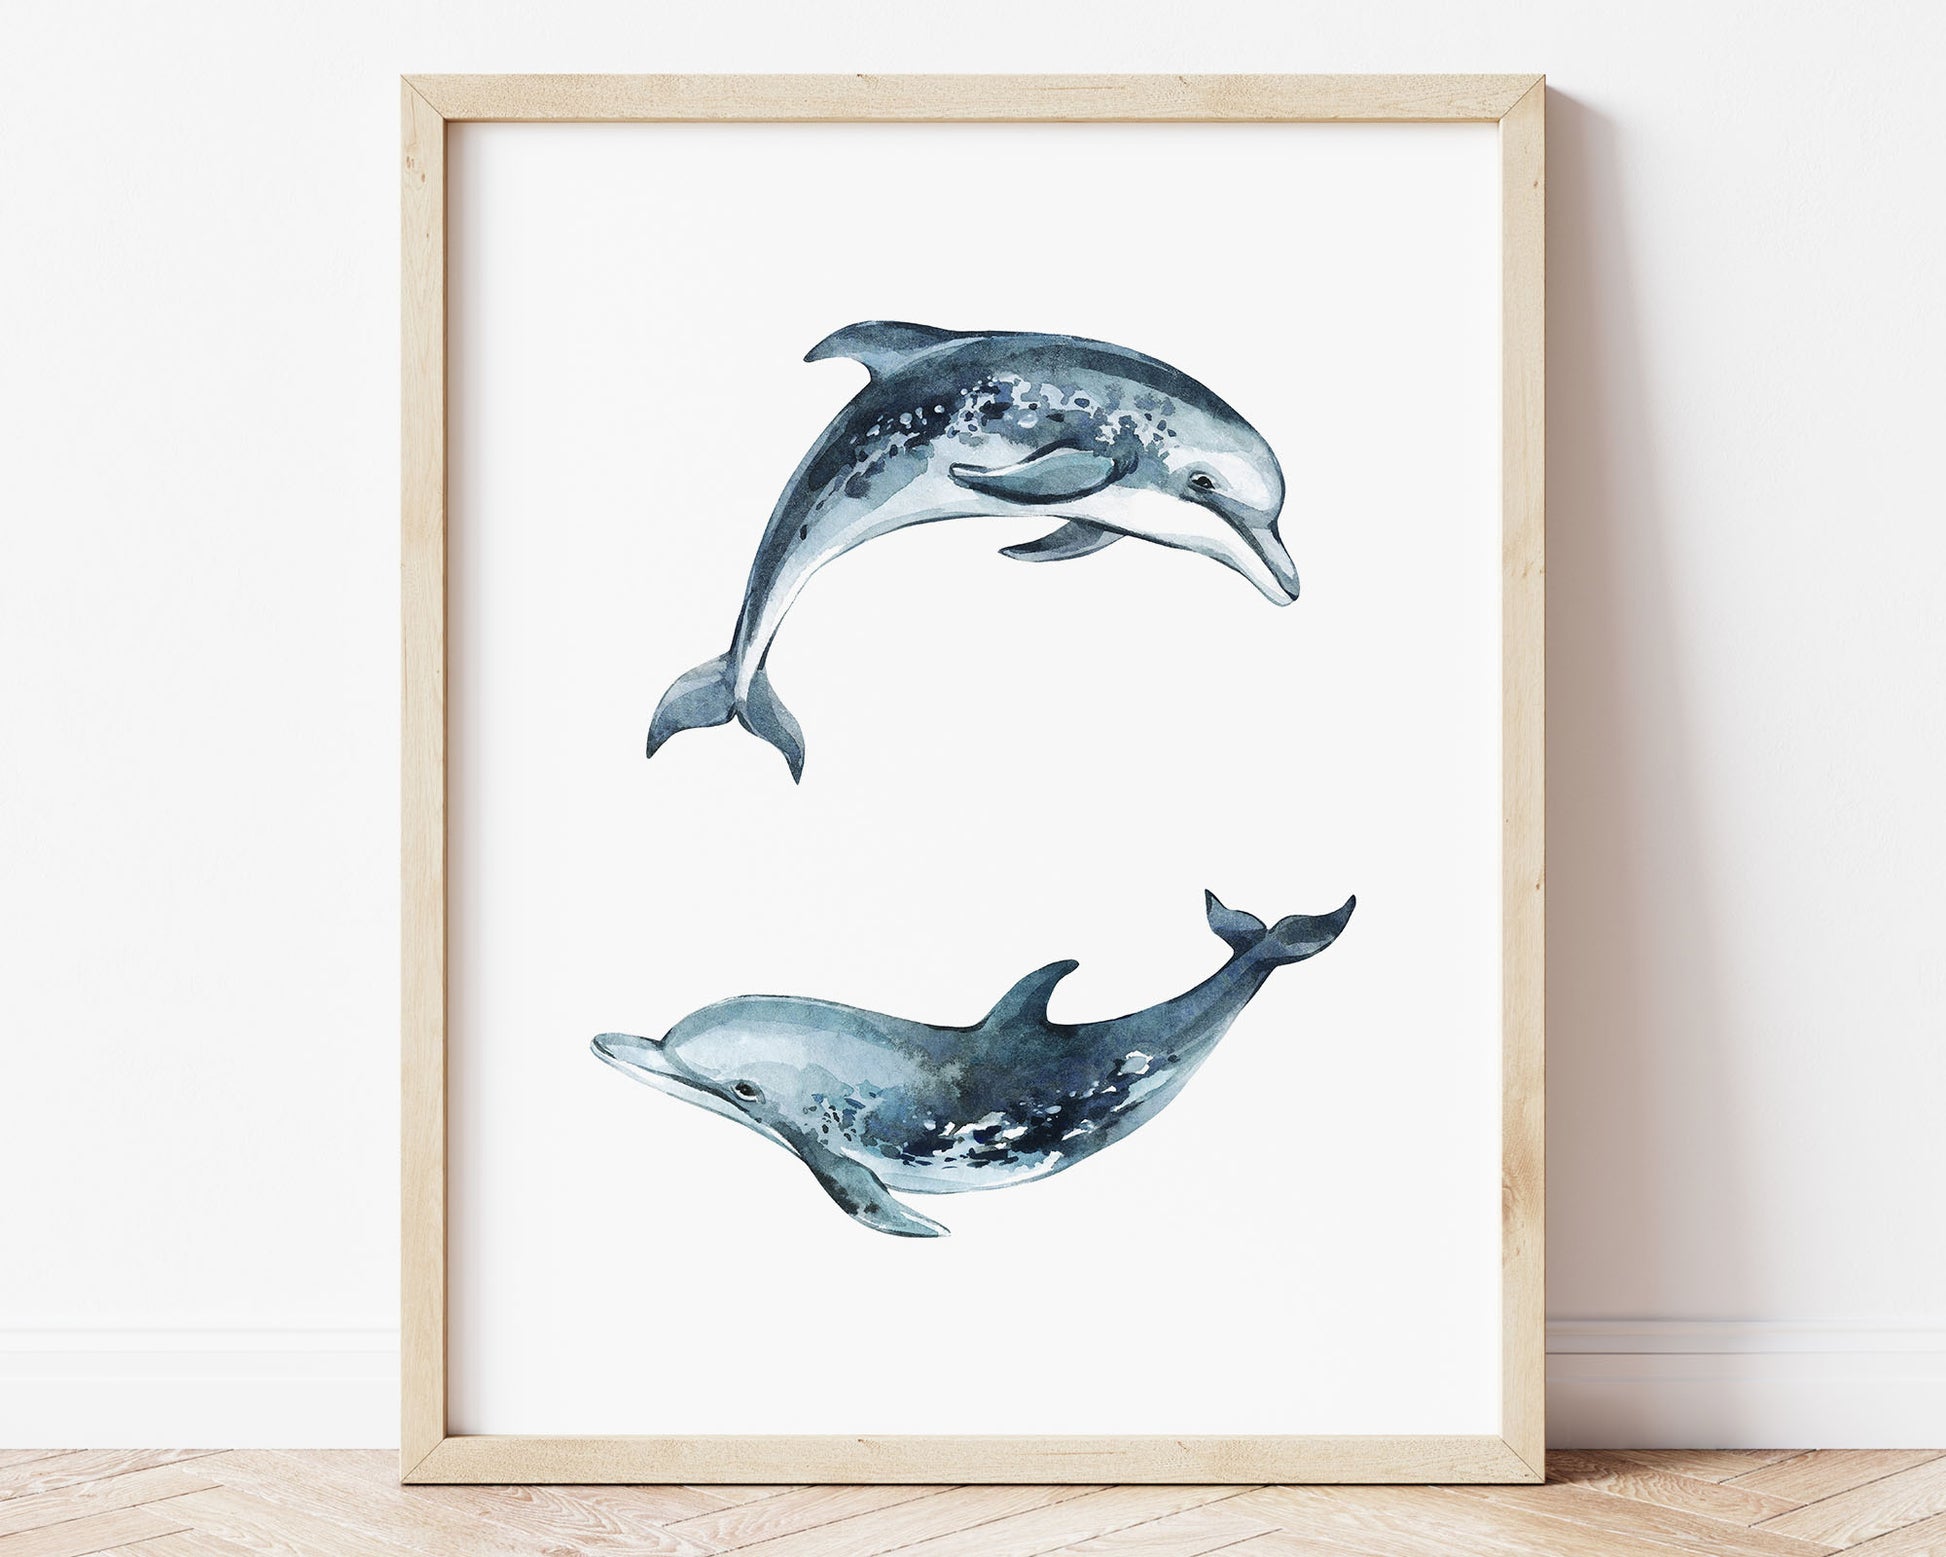 Watercolor Dolphin Printable Wall Art featuring deep dark navy blue watercolor dolphins illustration. Perfect for Baby Boy Ocean Nursery Decor, Baby Girl Coastal Nursery Wall Art or Nautical Kids Room Decor.